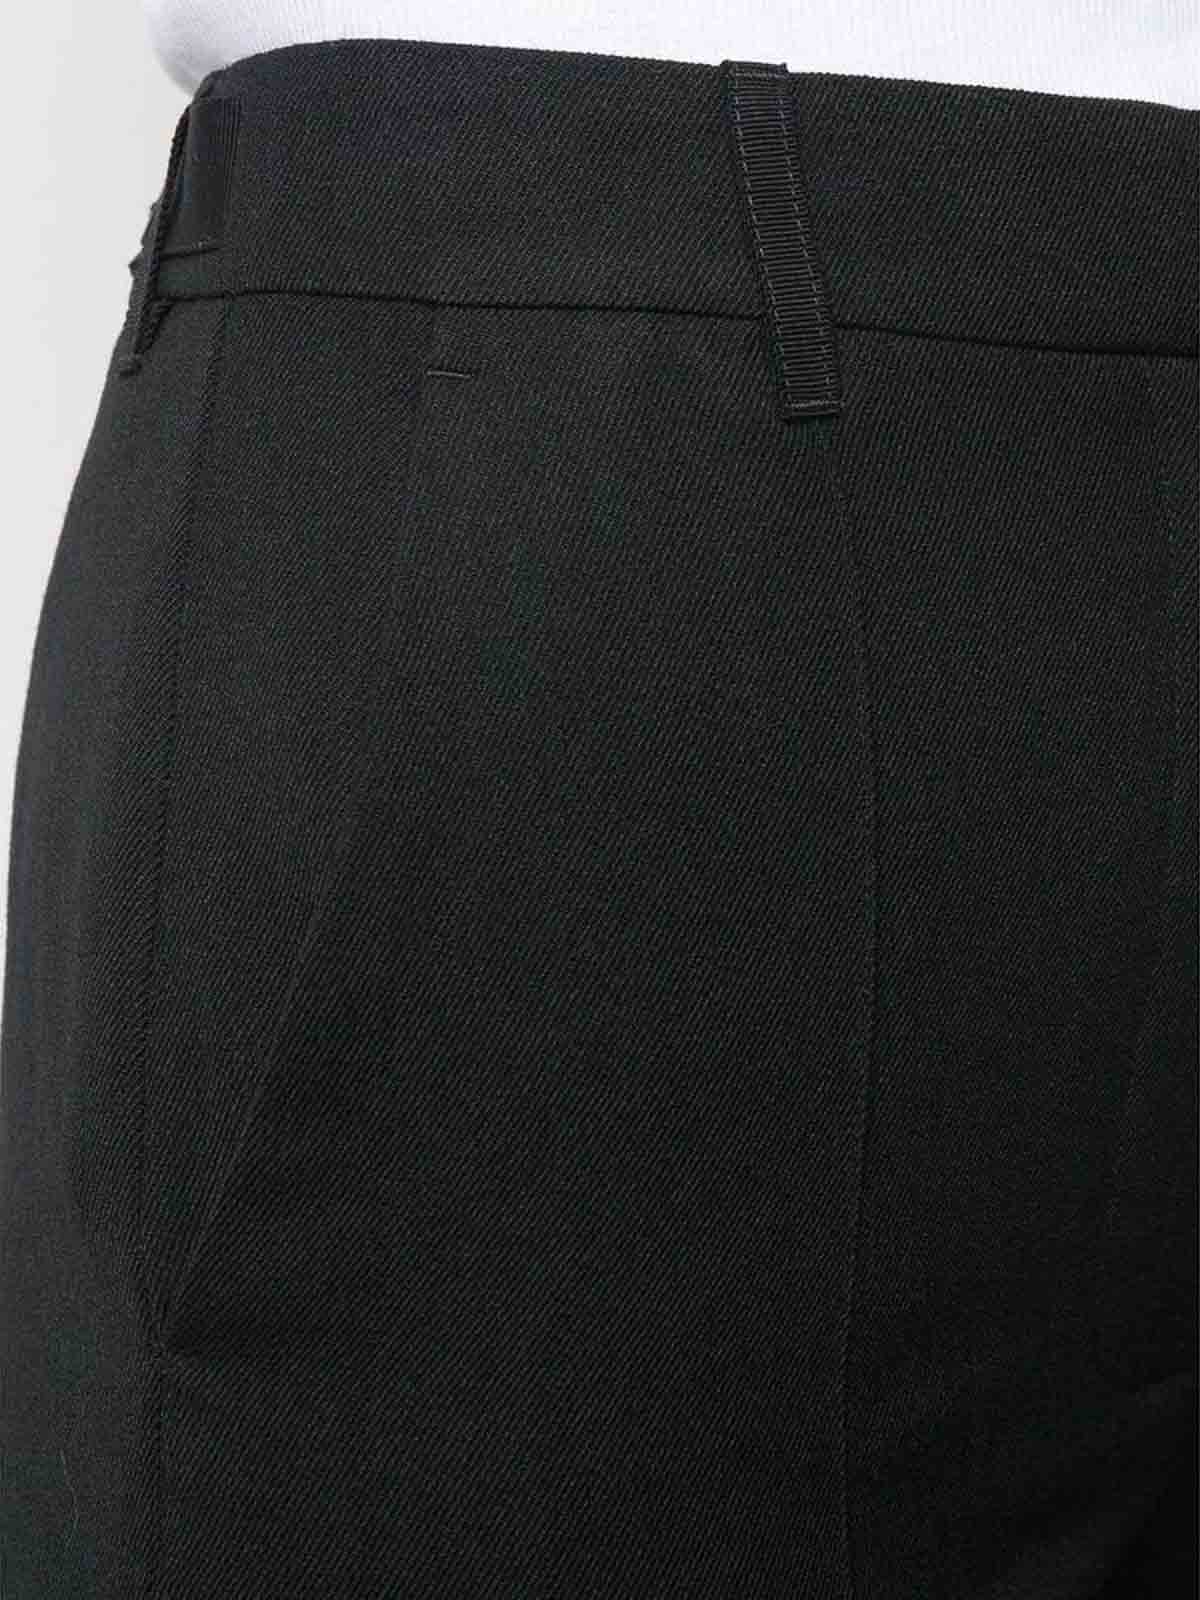 Shop Ann Demeulemeester Black Slim Fit Trousers